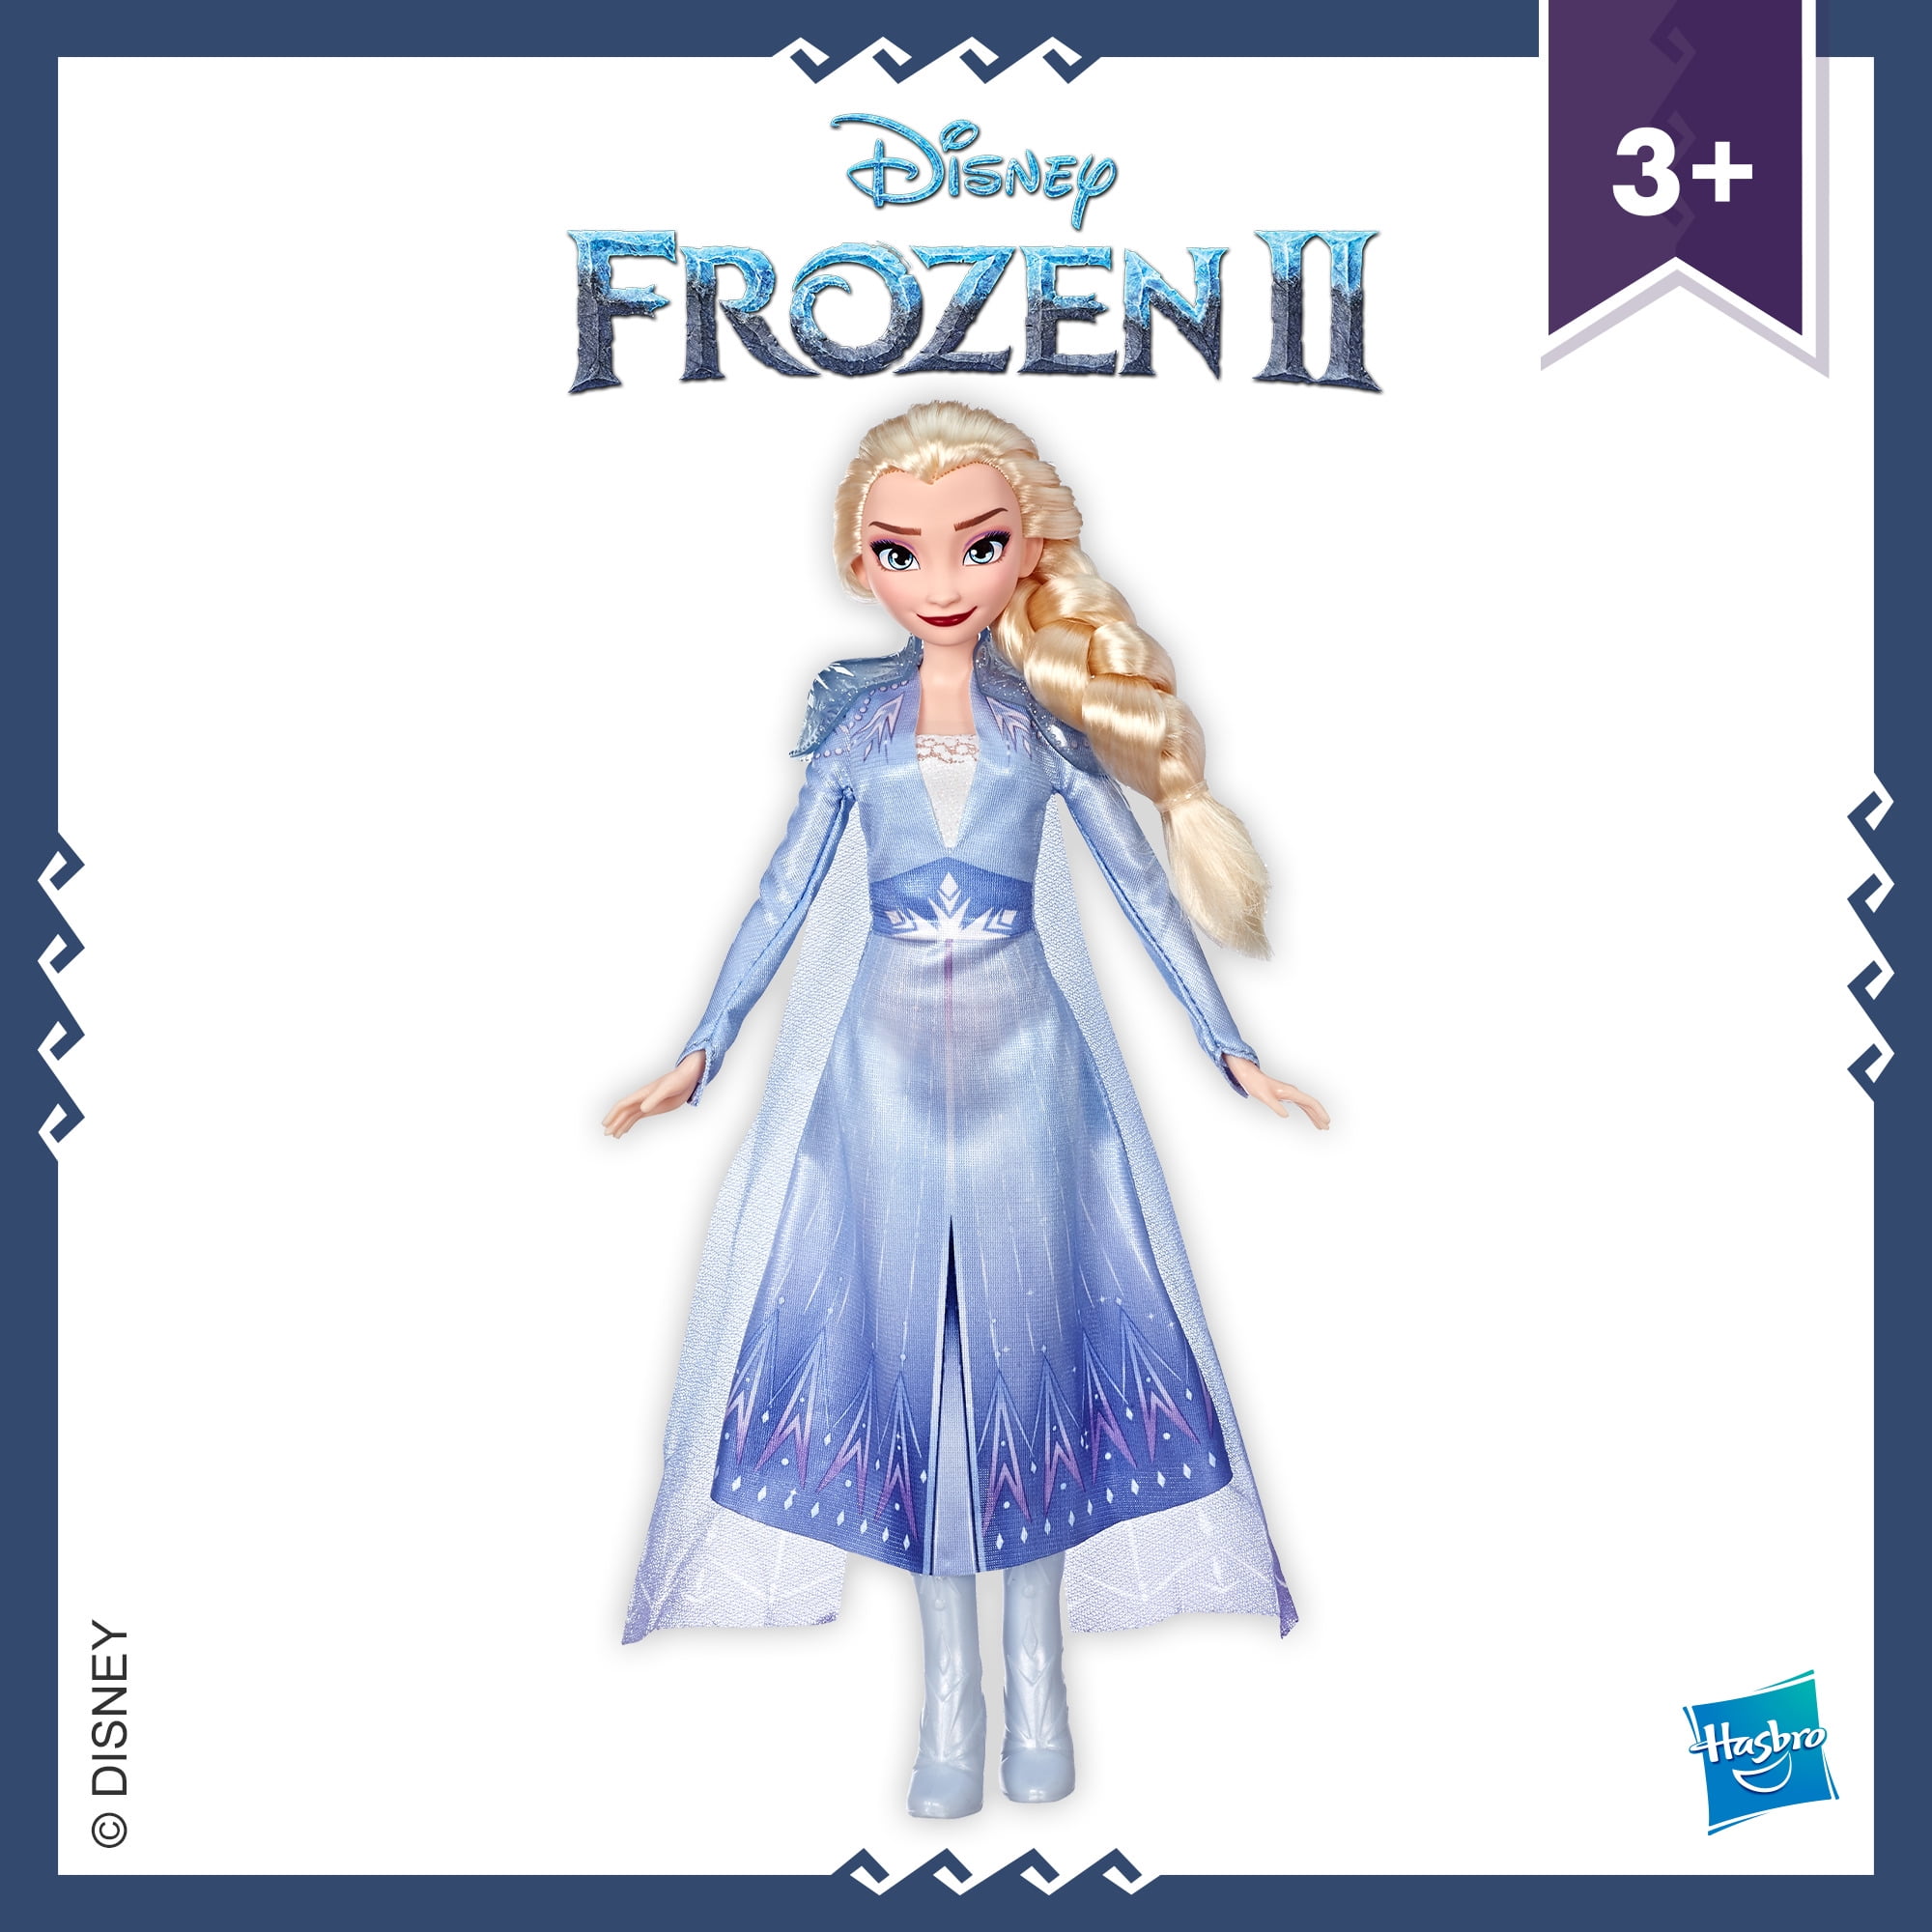 Disney Frozen 2 Elsa Fashion Doll Long Blonde Includes Outfit Walmart.com